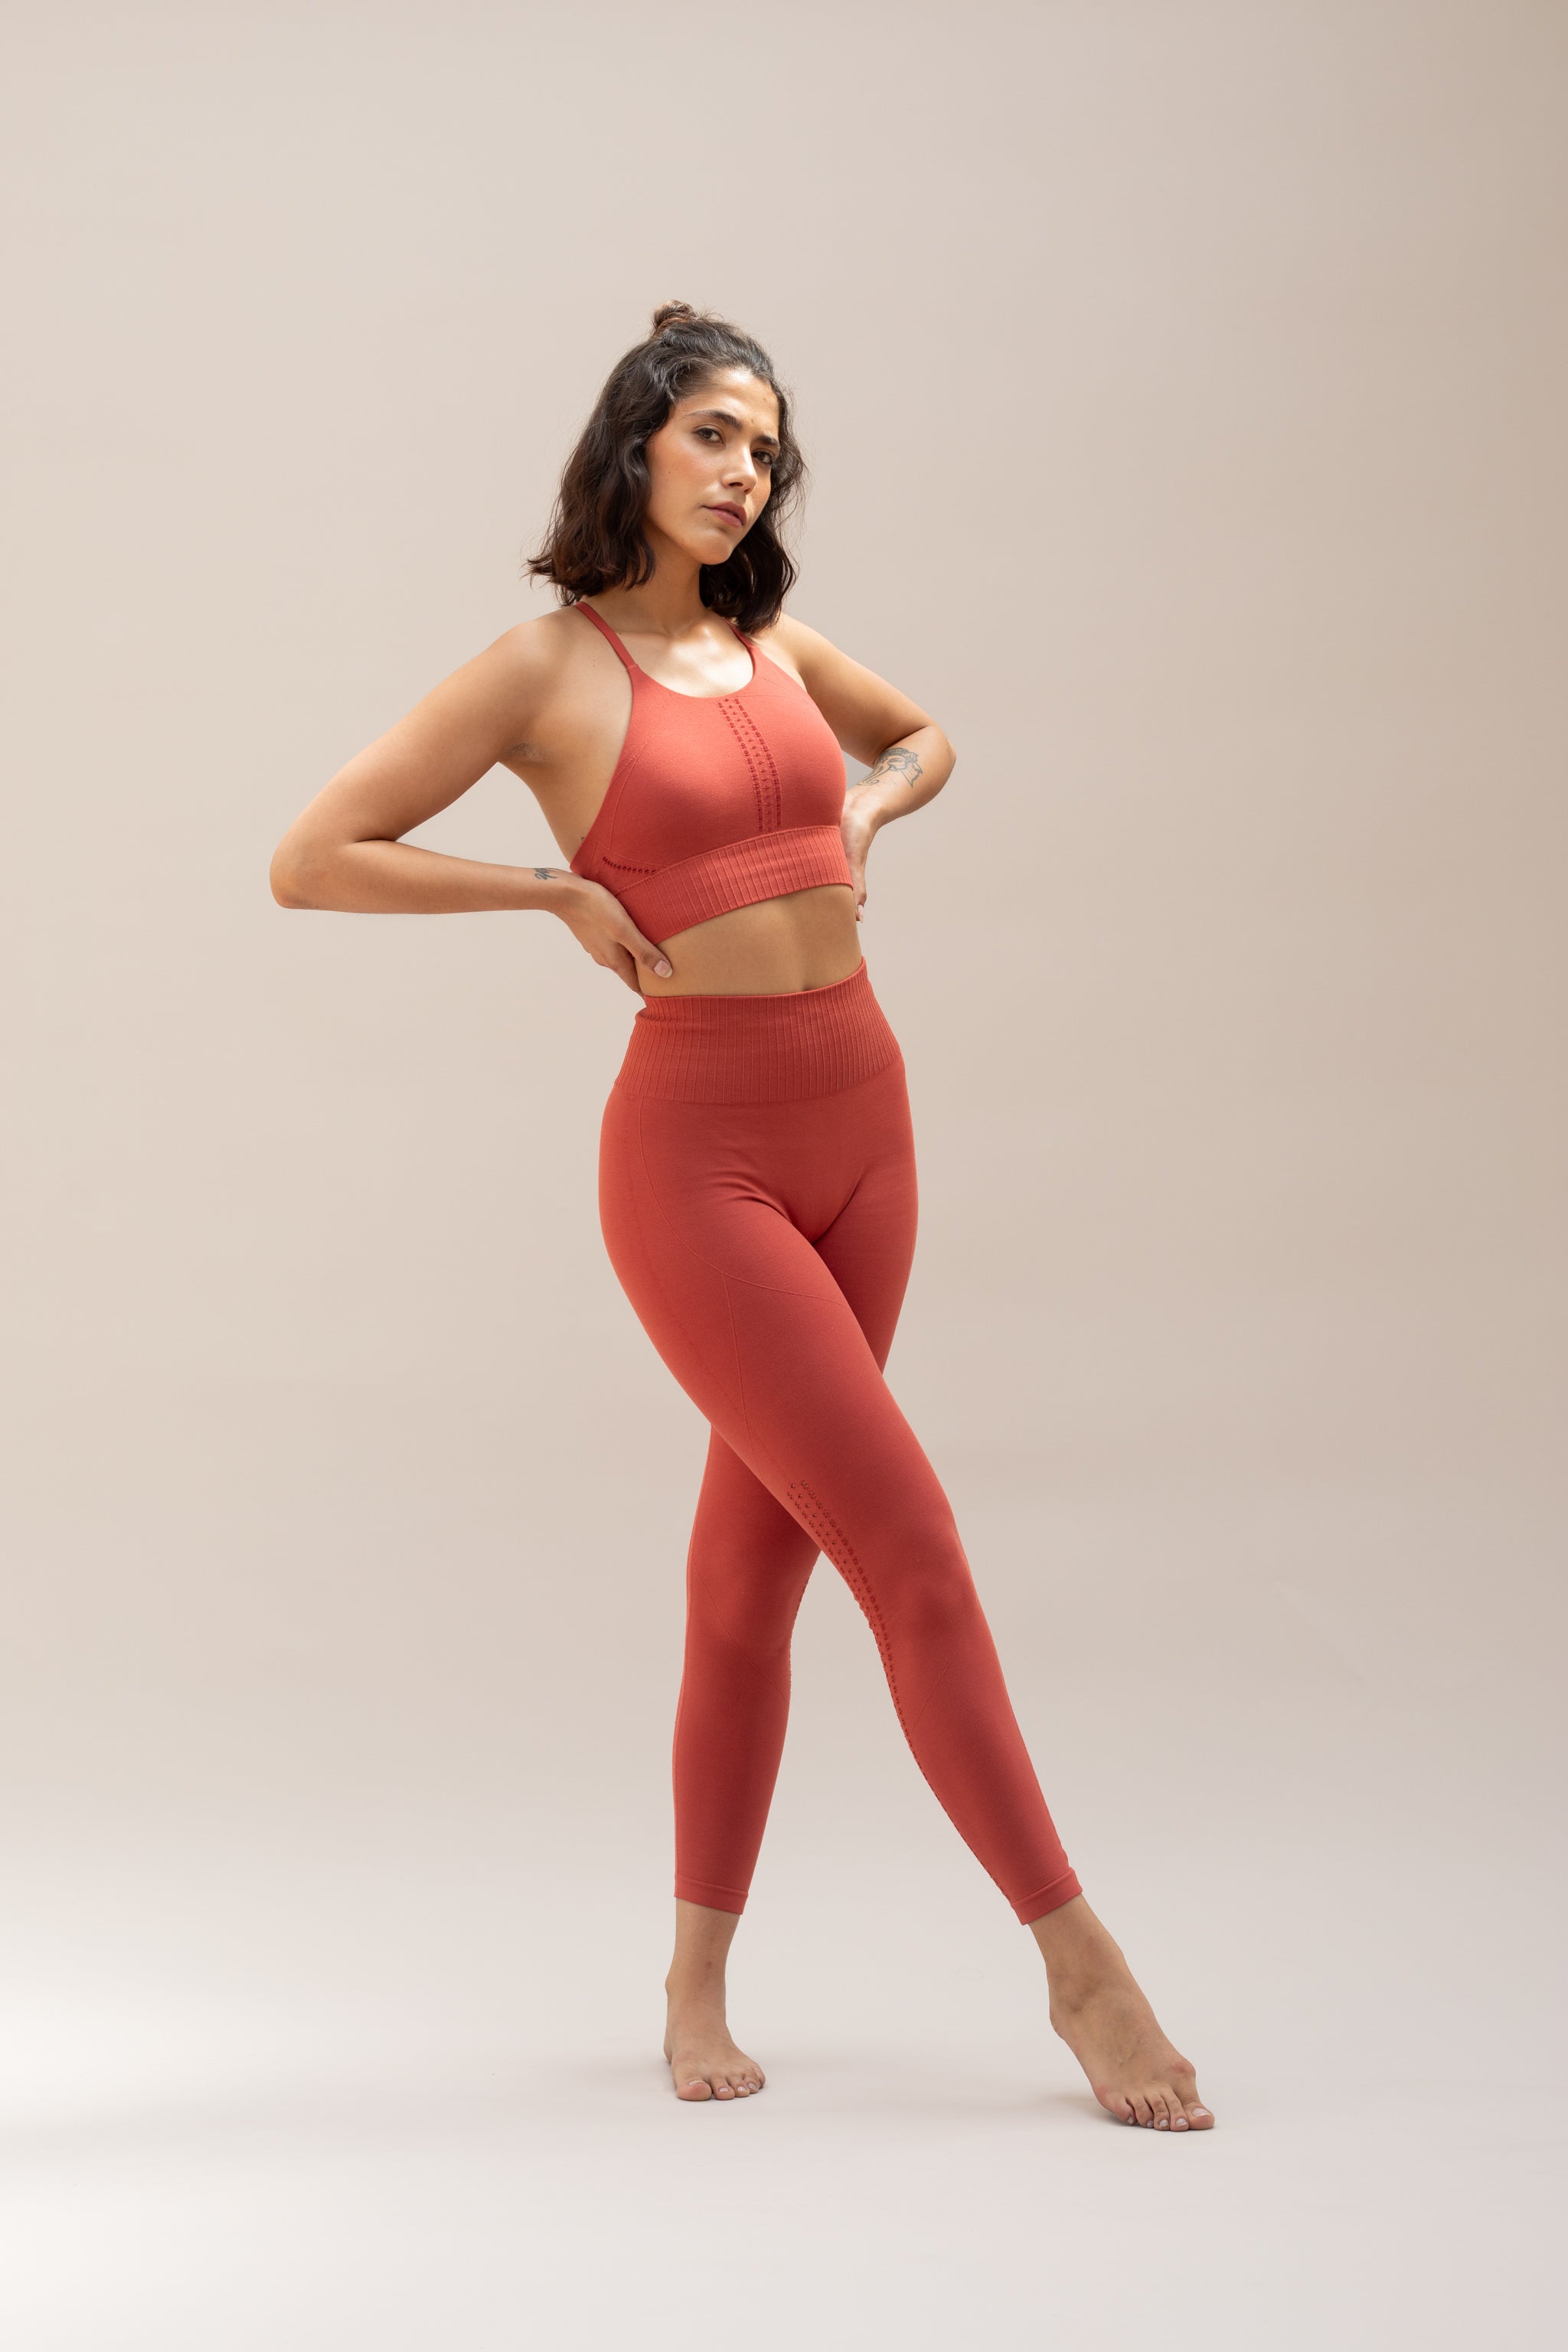 THEORY BRA Valerie - Topical Print Yoga Clothes - Bikram Yoga Top – Toda  Boa Active Wear